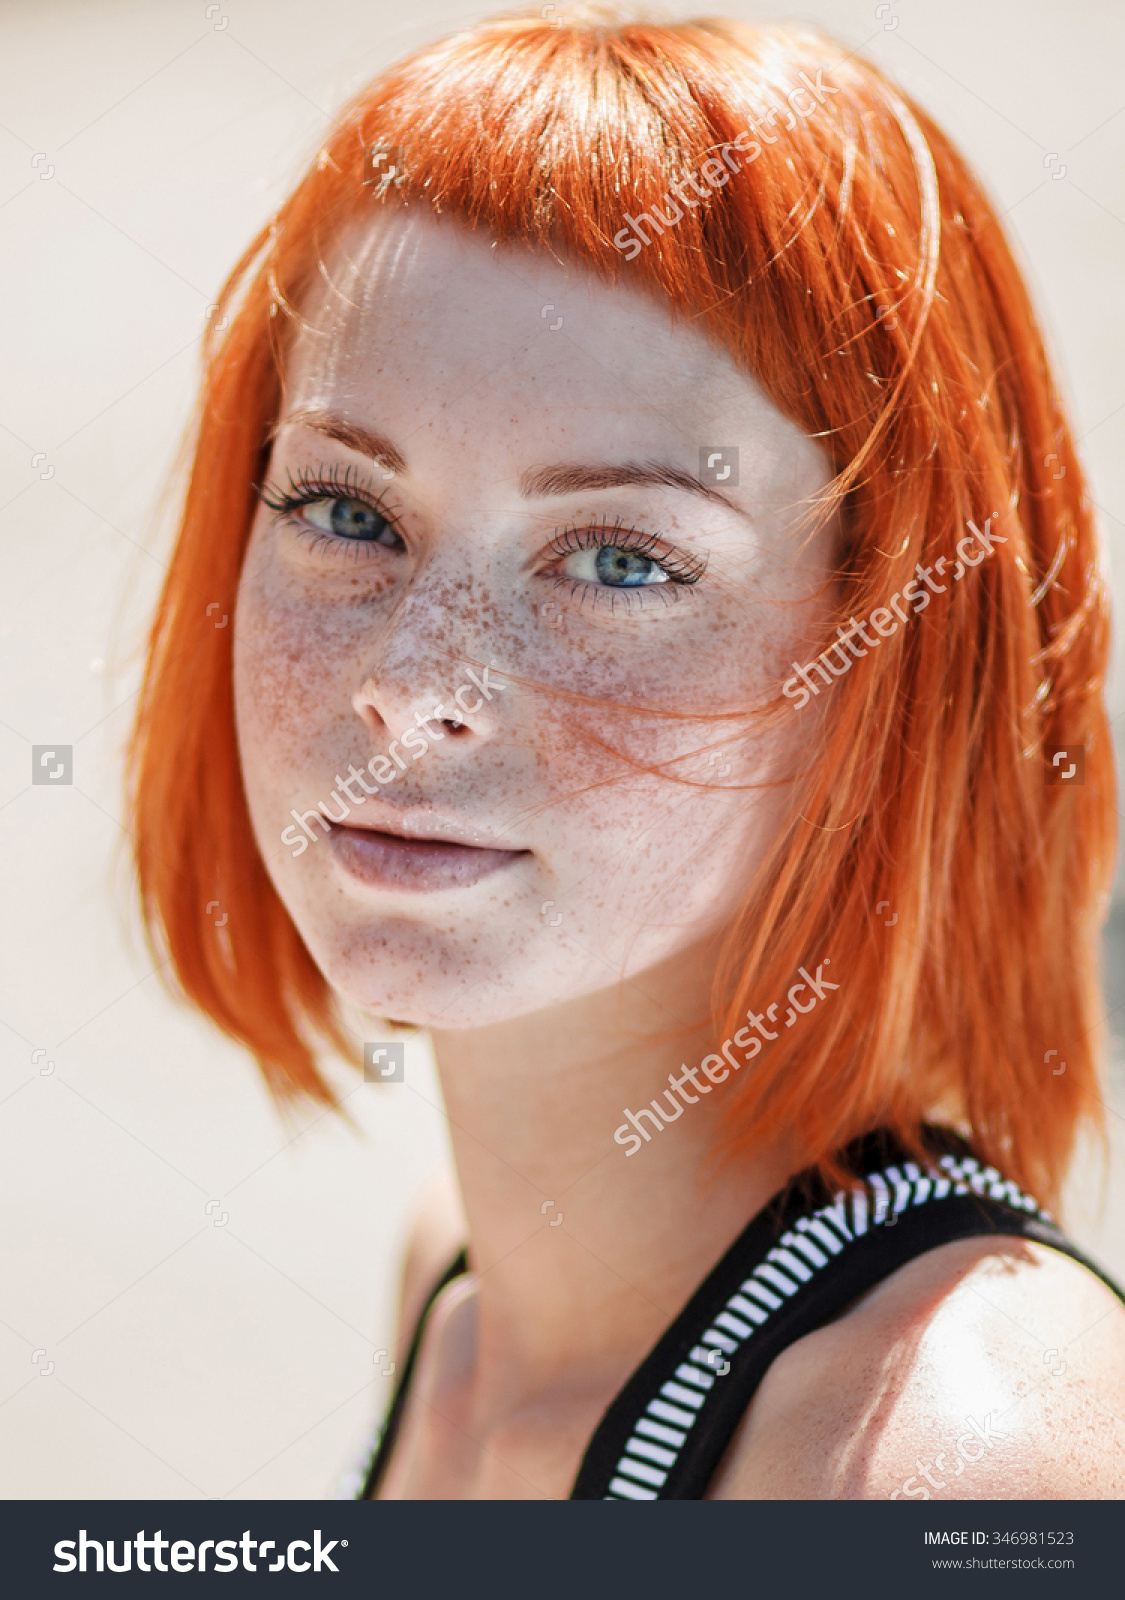 Cute redhead girl freckles - Adult videos